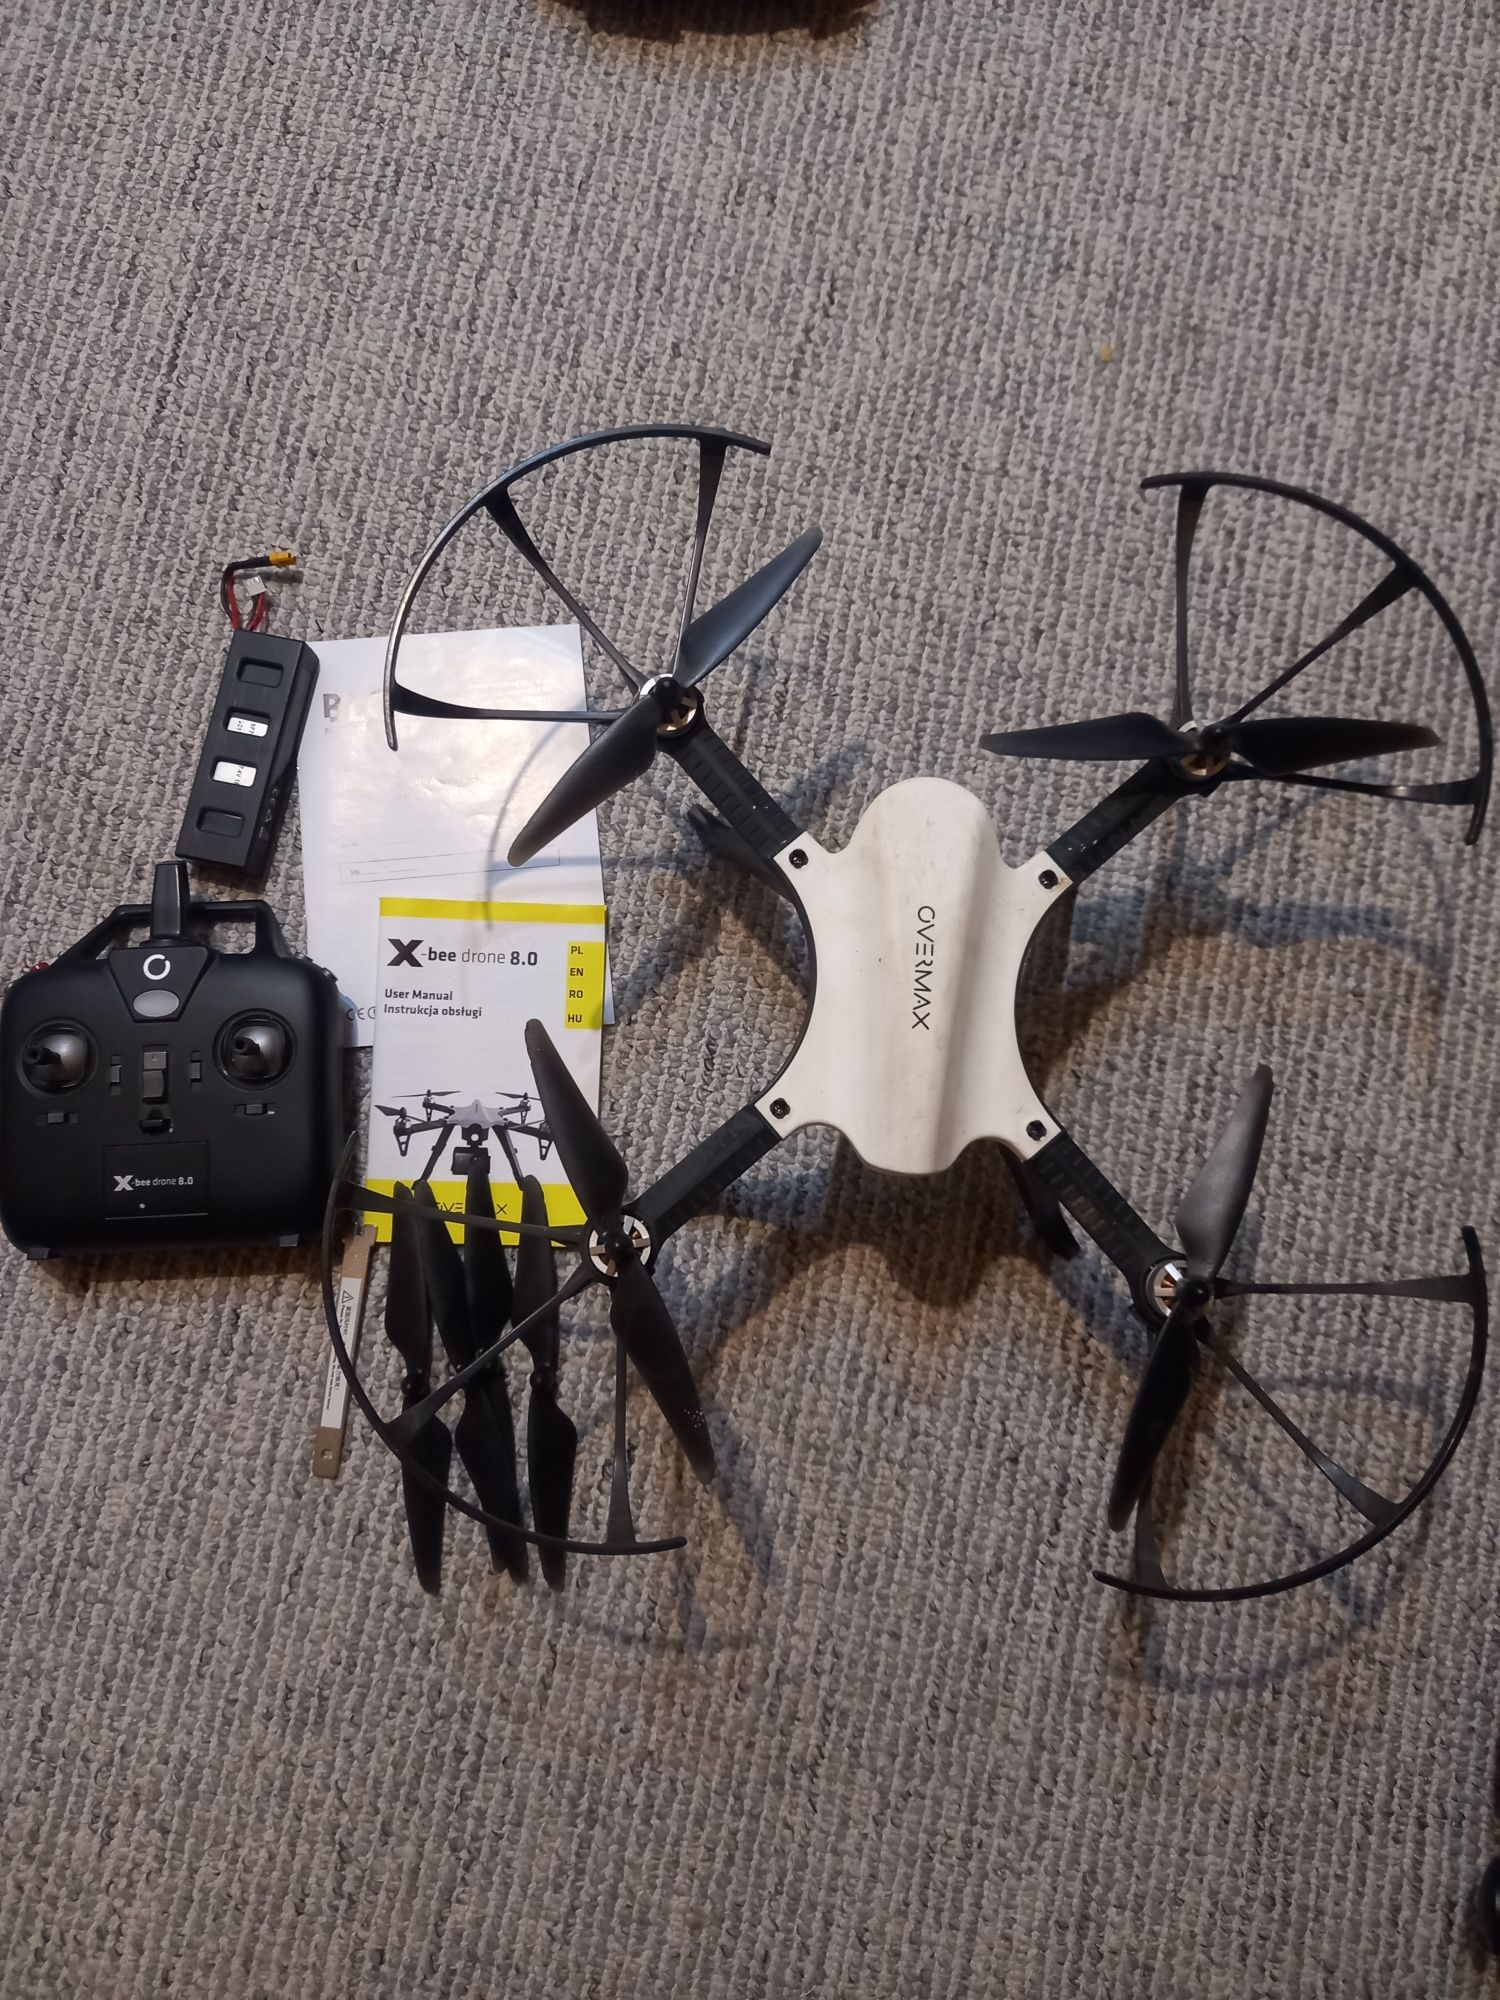 Dron overmax OV-X bee drone 8.0